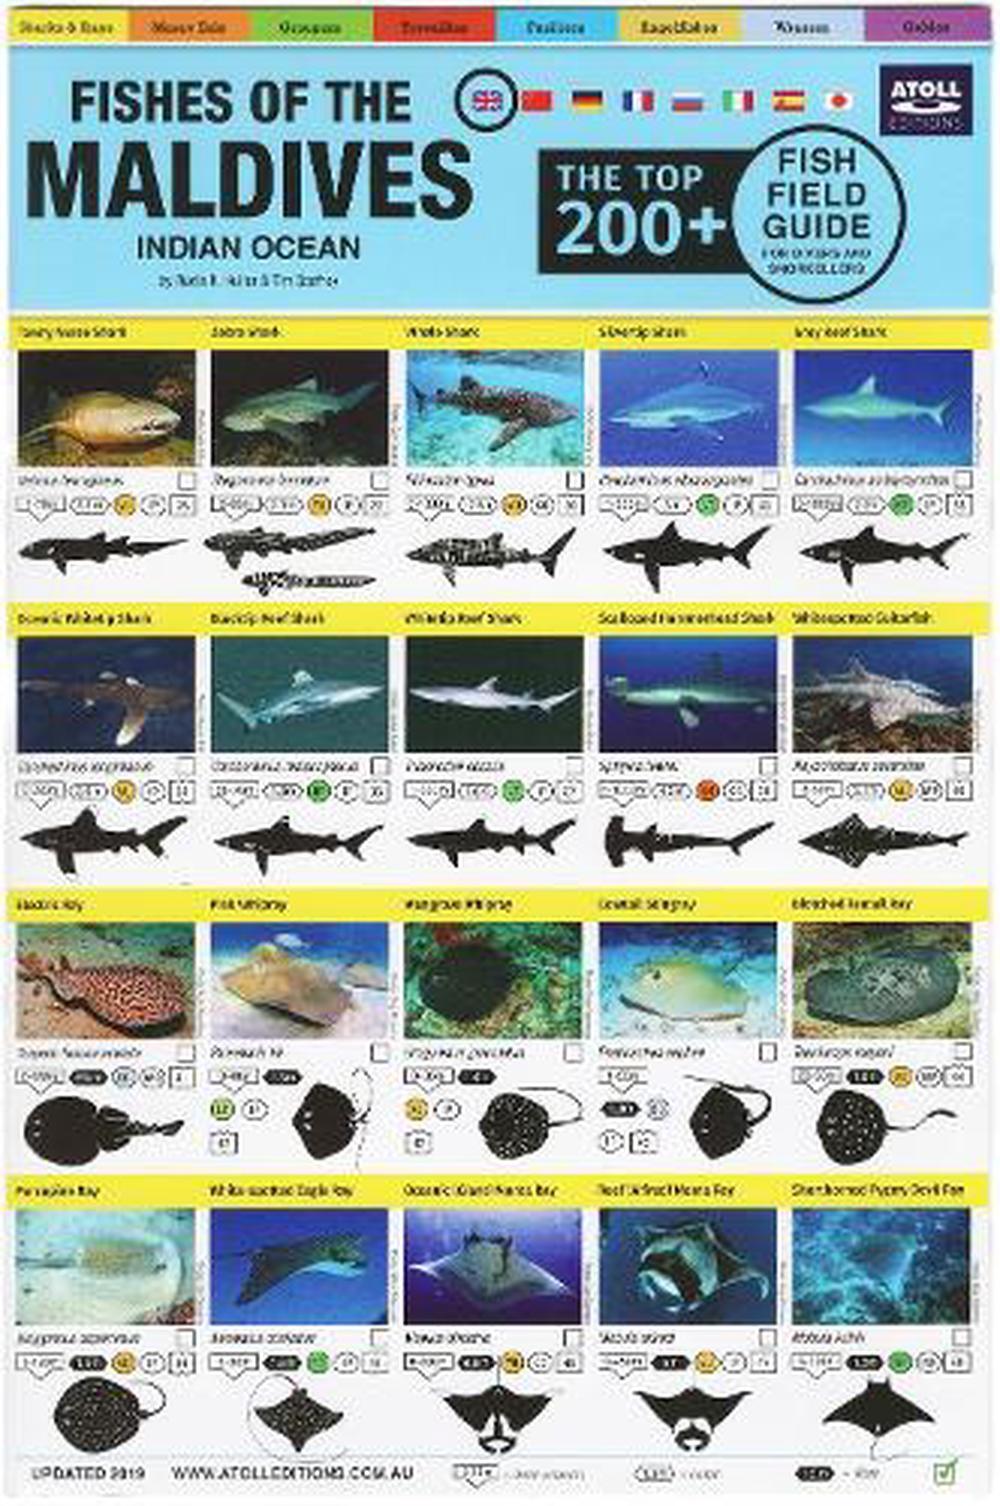 Maldives Fish Field Guide "Top 200+": Indian Ocean Field Guide by Tim Godfrey (E